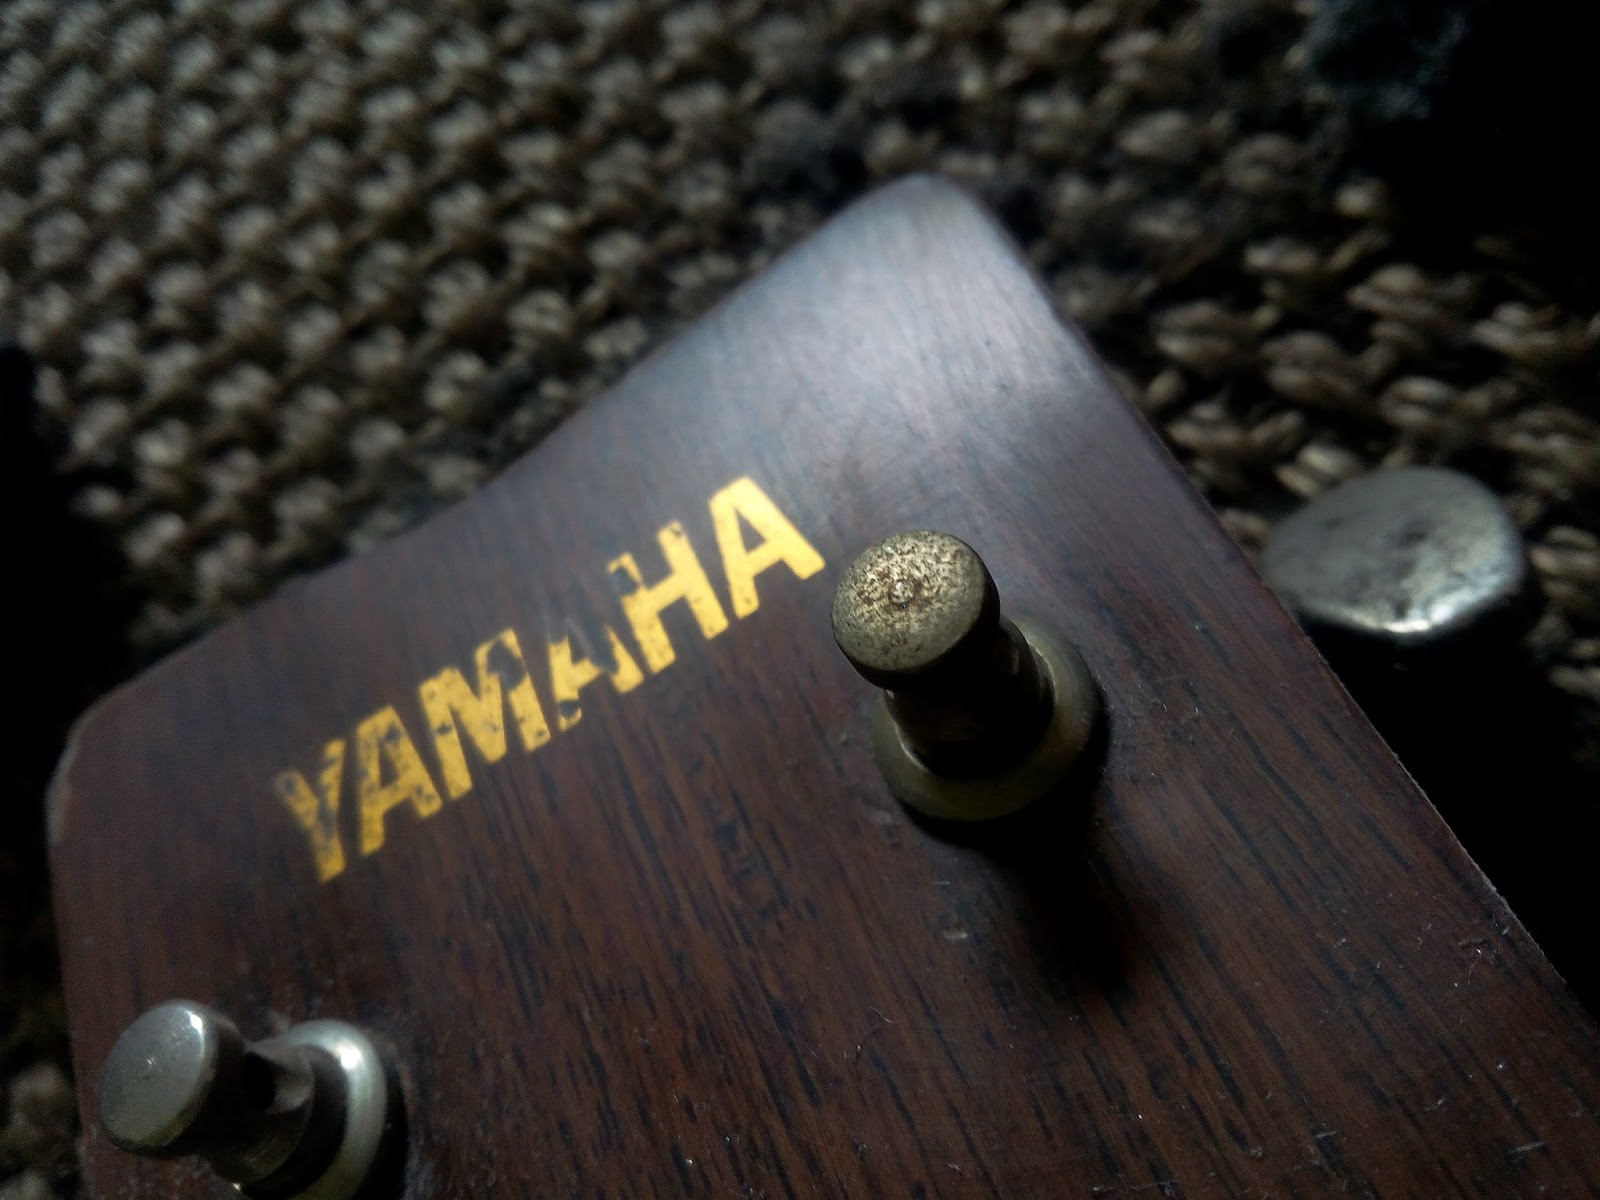 Yamaha Fg 150 Red Label Guitar Aajapan Vintage Dreadnought